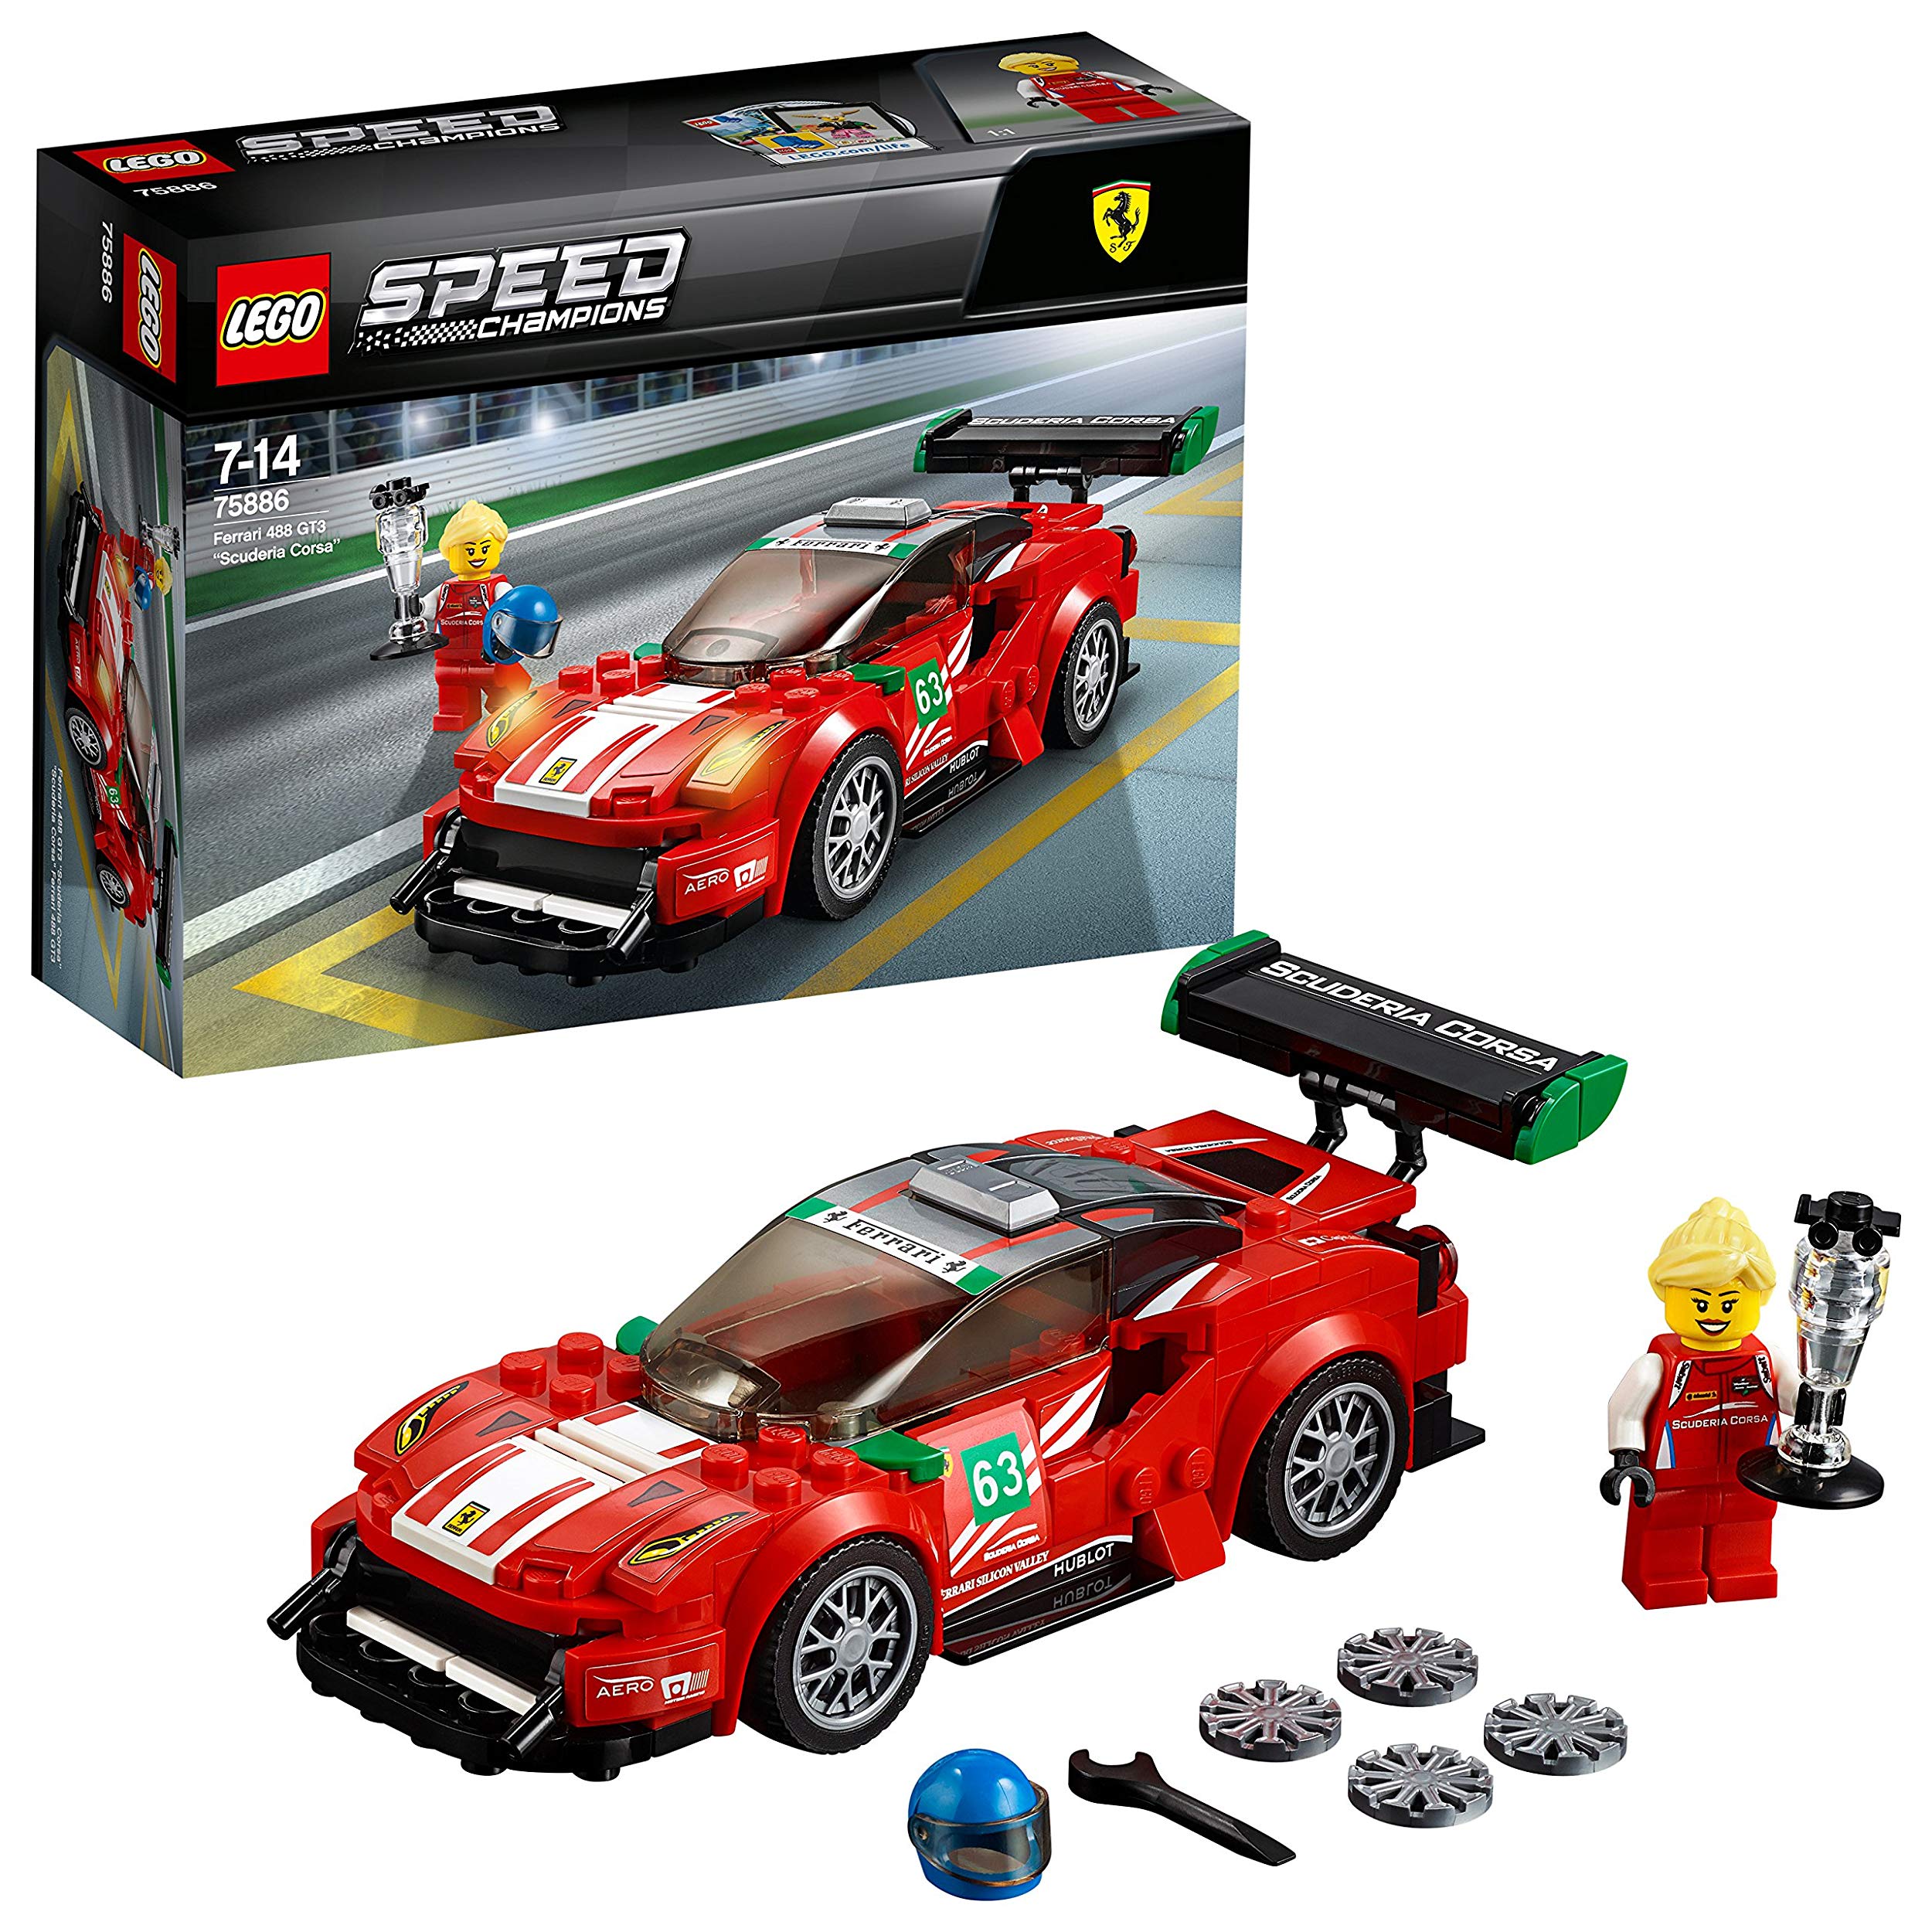 Lego Speed Champions Ferrari Gt Scuderia Corsa Construction Toy